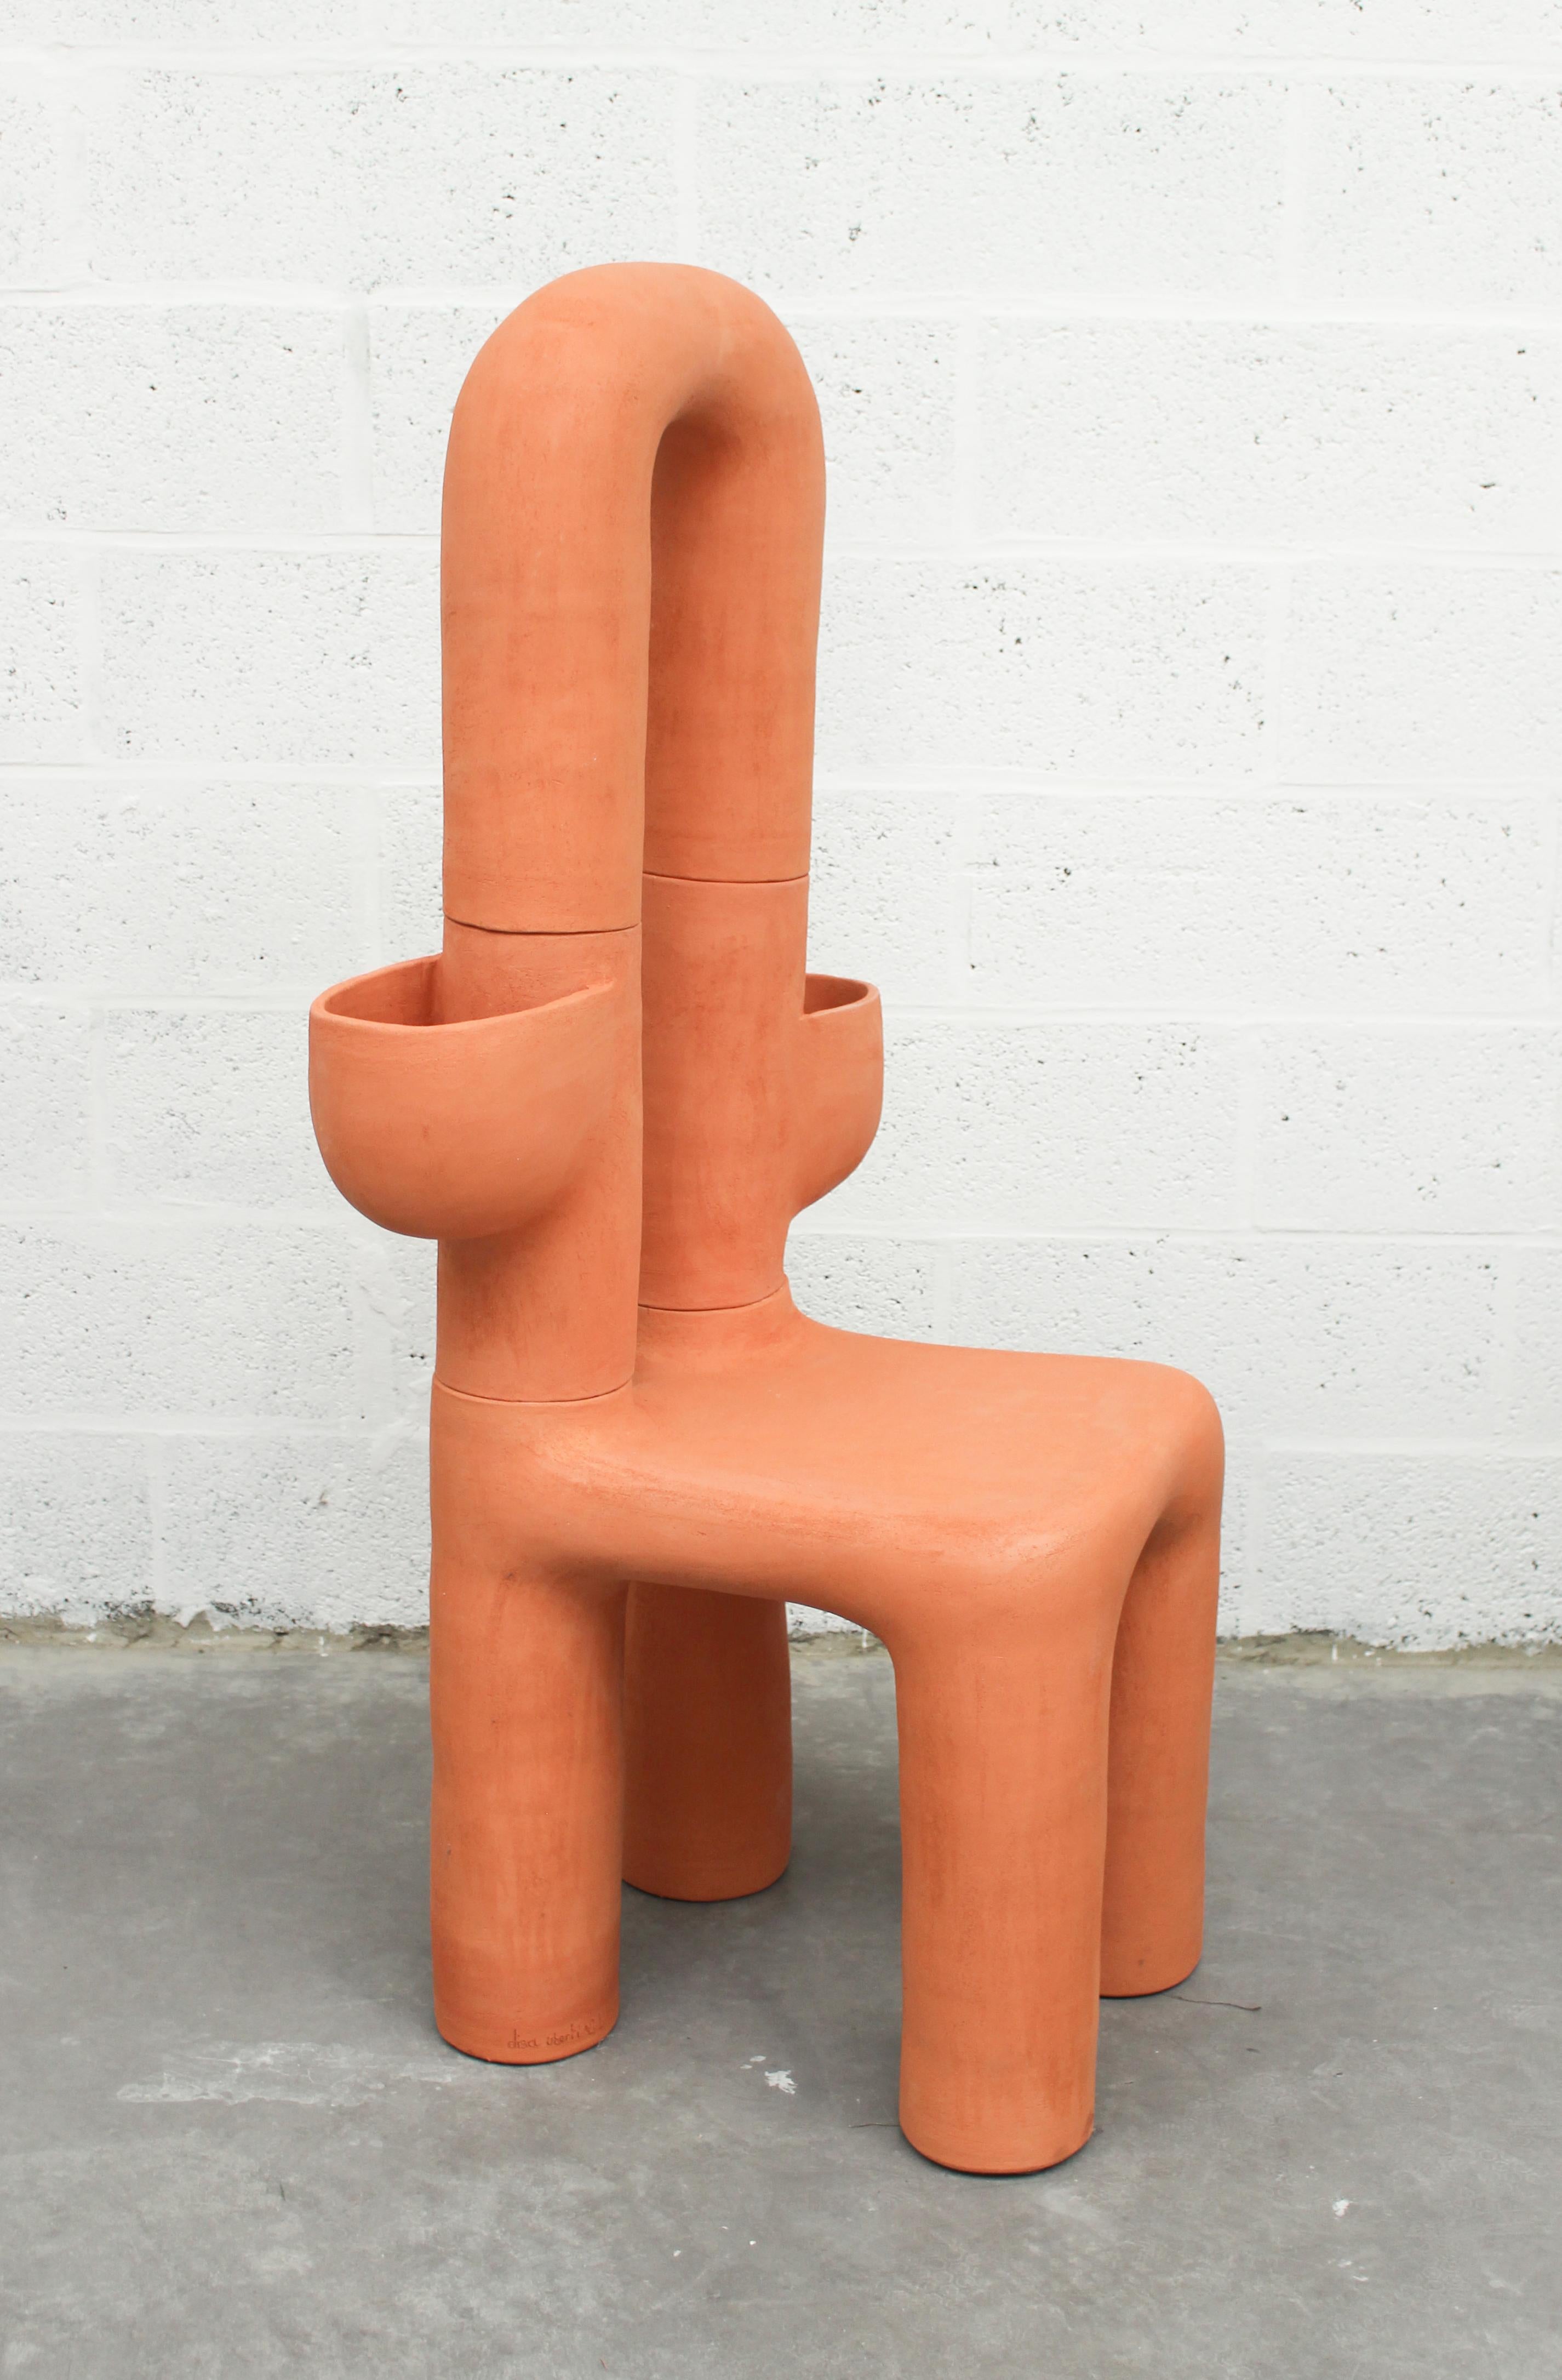 Post-Modern Eden #1 Terracotta Clay Chair by Elisa Uberti